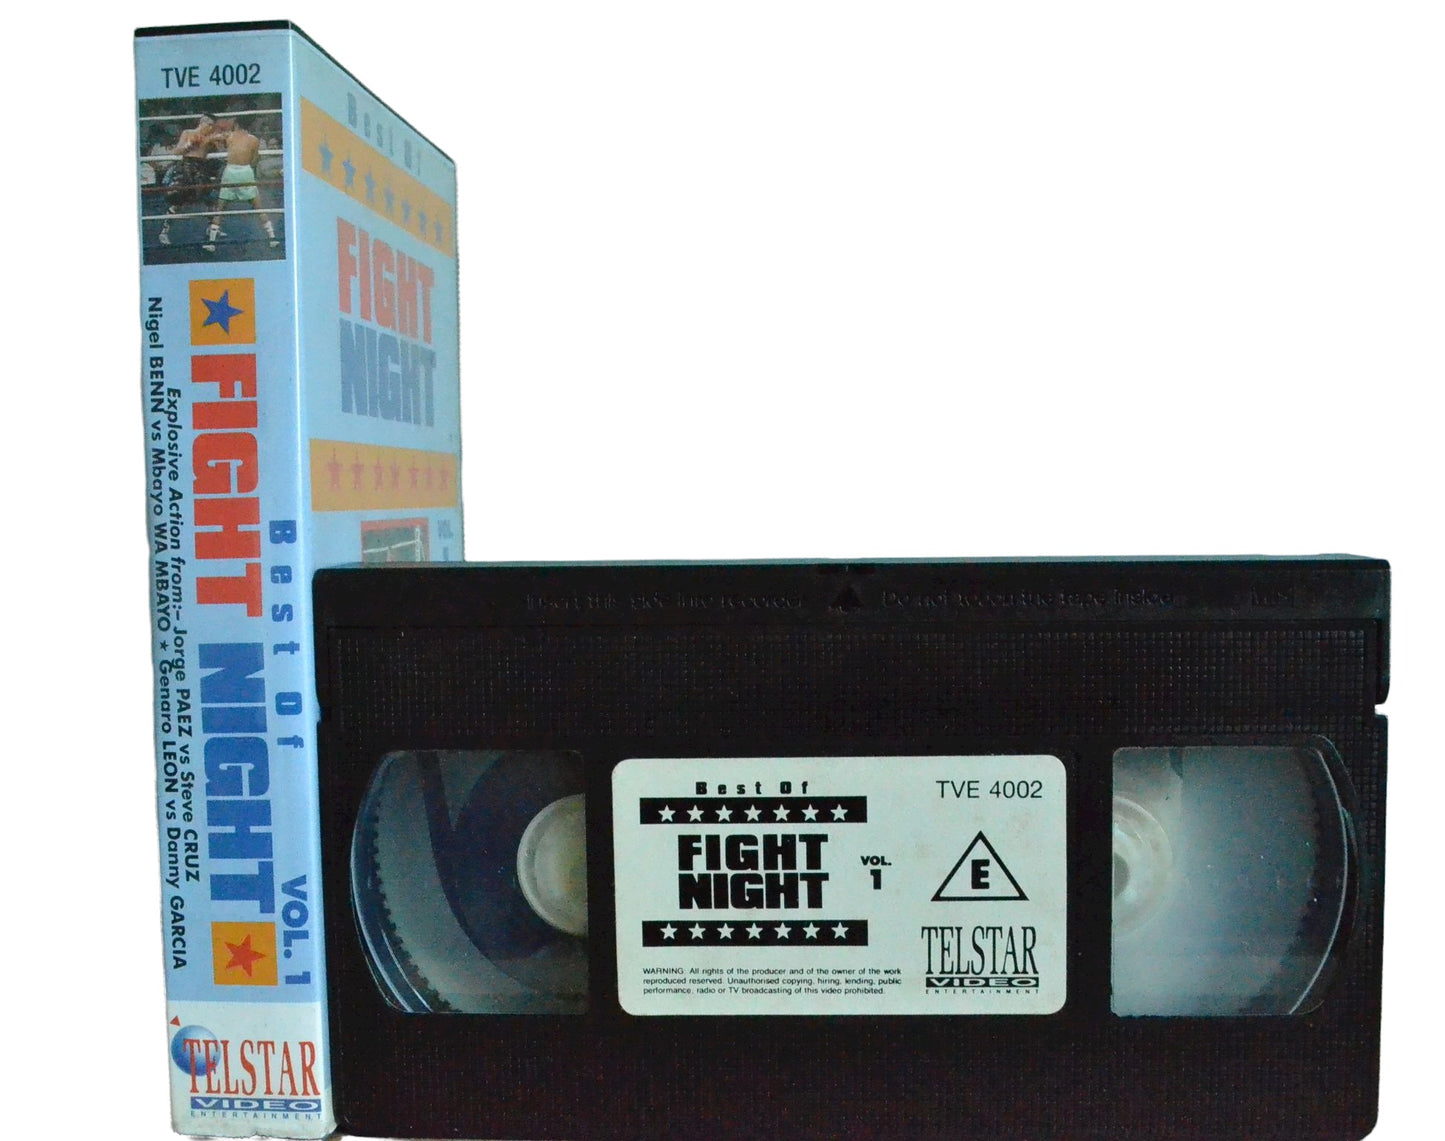 Best Of Fight Night - Vol. 1 - Jorge Paez - Telstar Video - Boxing - Pal VHS-